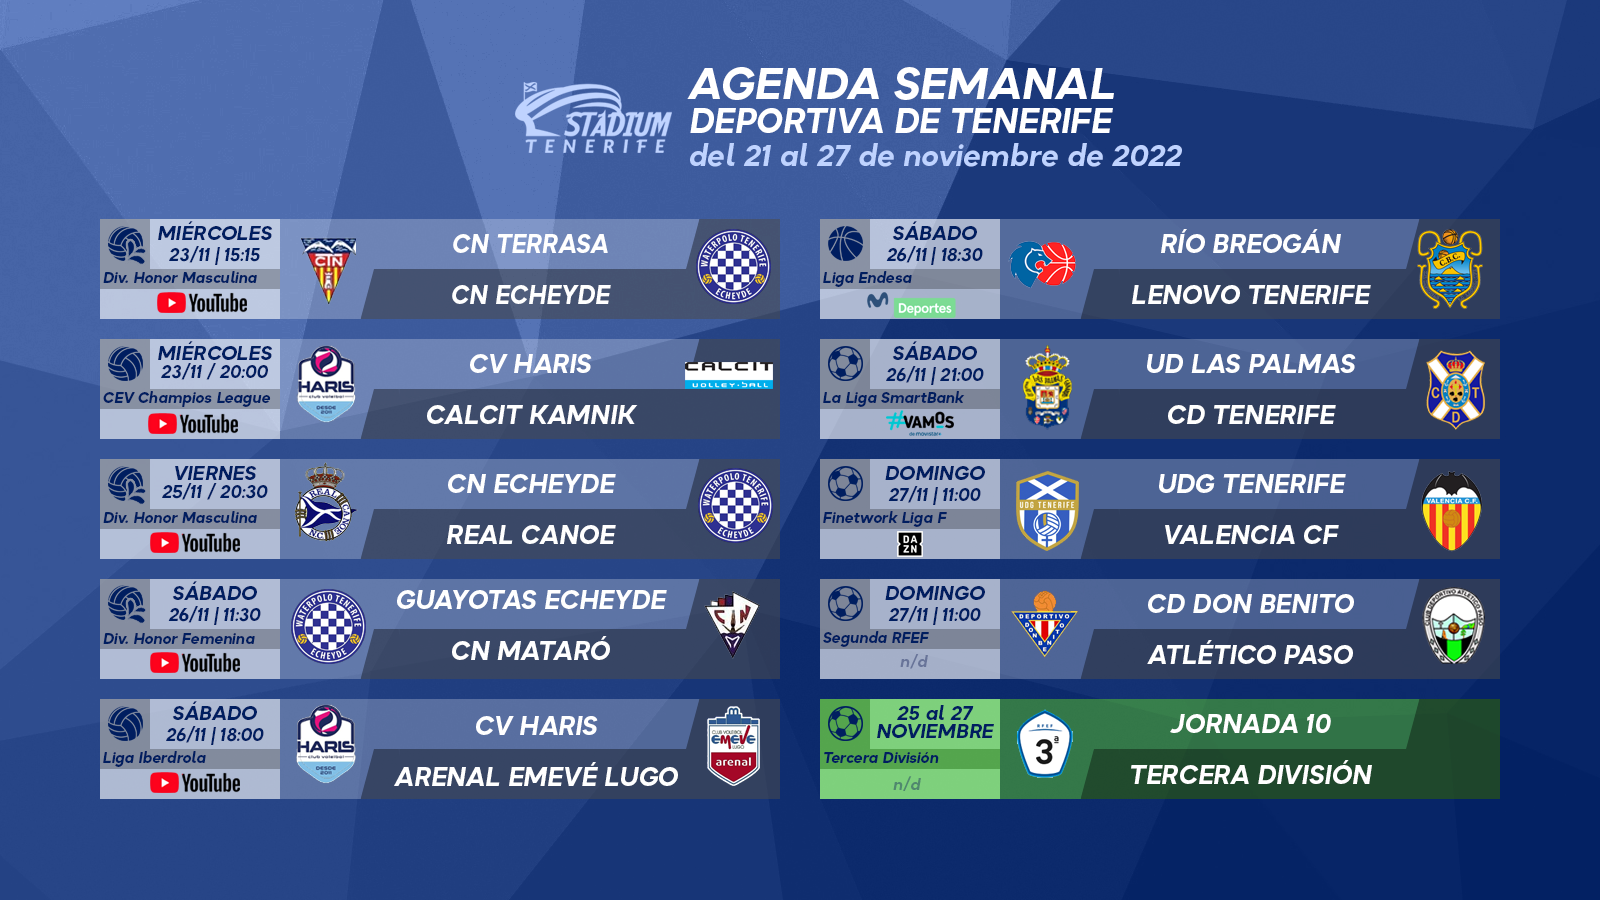 Agenda Semanal Deportiva de Tenerife (21 al 27 de noviembre)